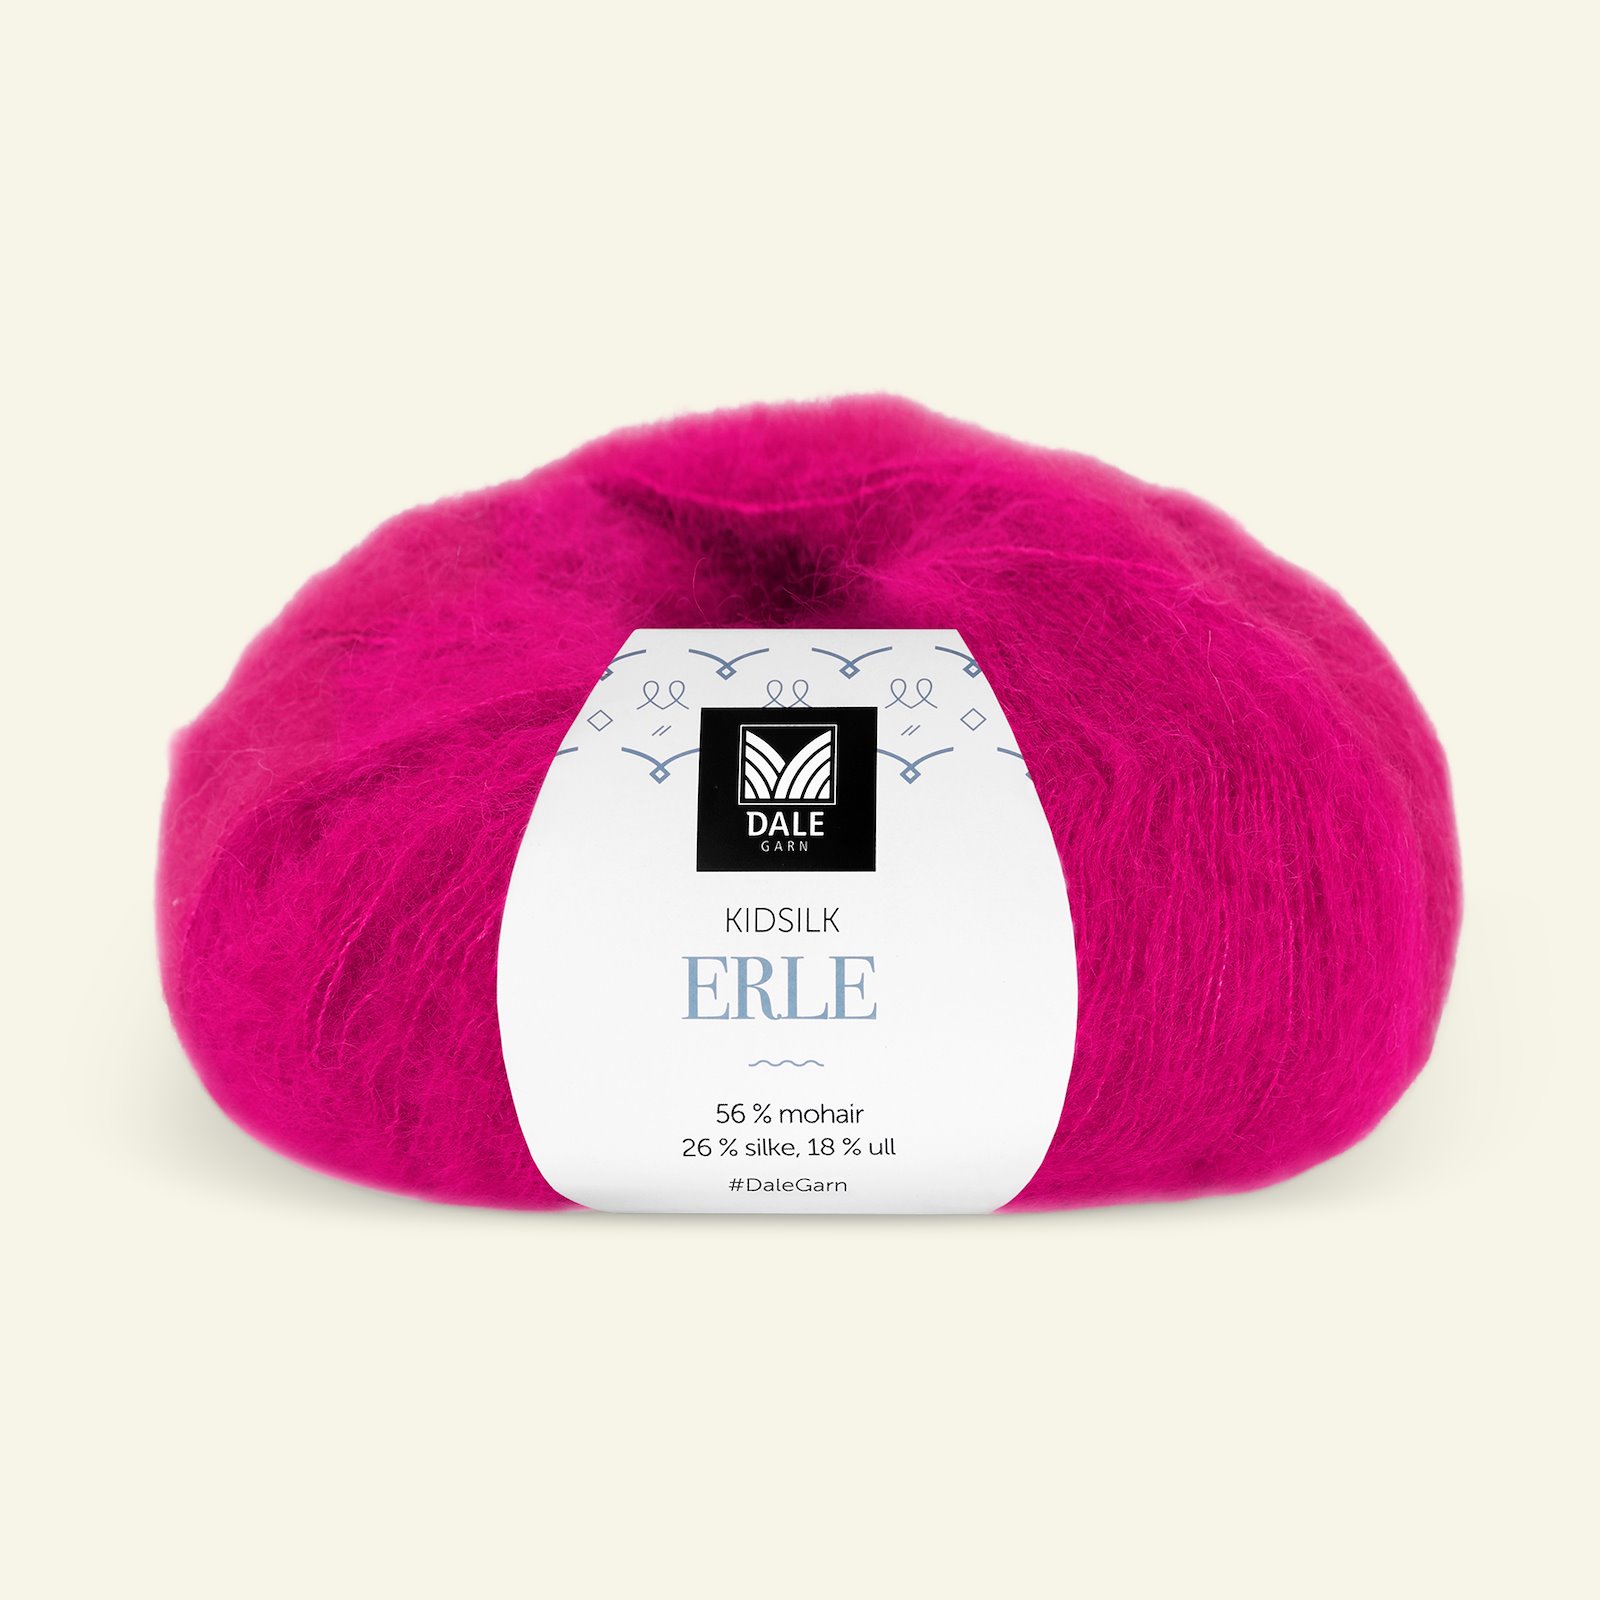 Dale Garn, Seide Mohair Wolle "Kidsilk Erle", pink (9071) 90000797_pack